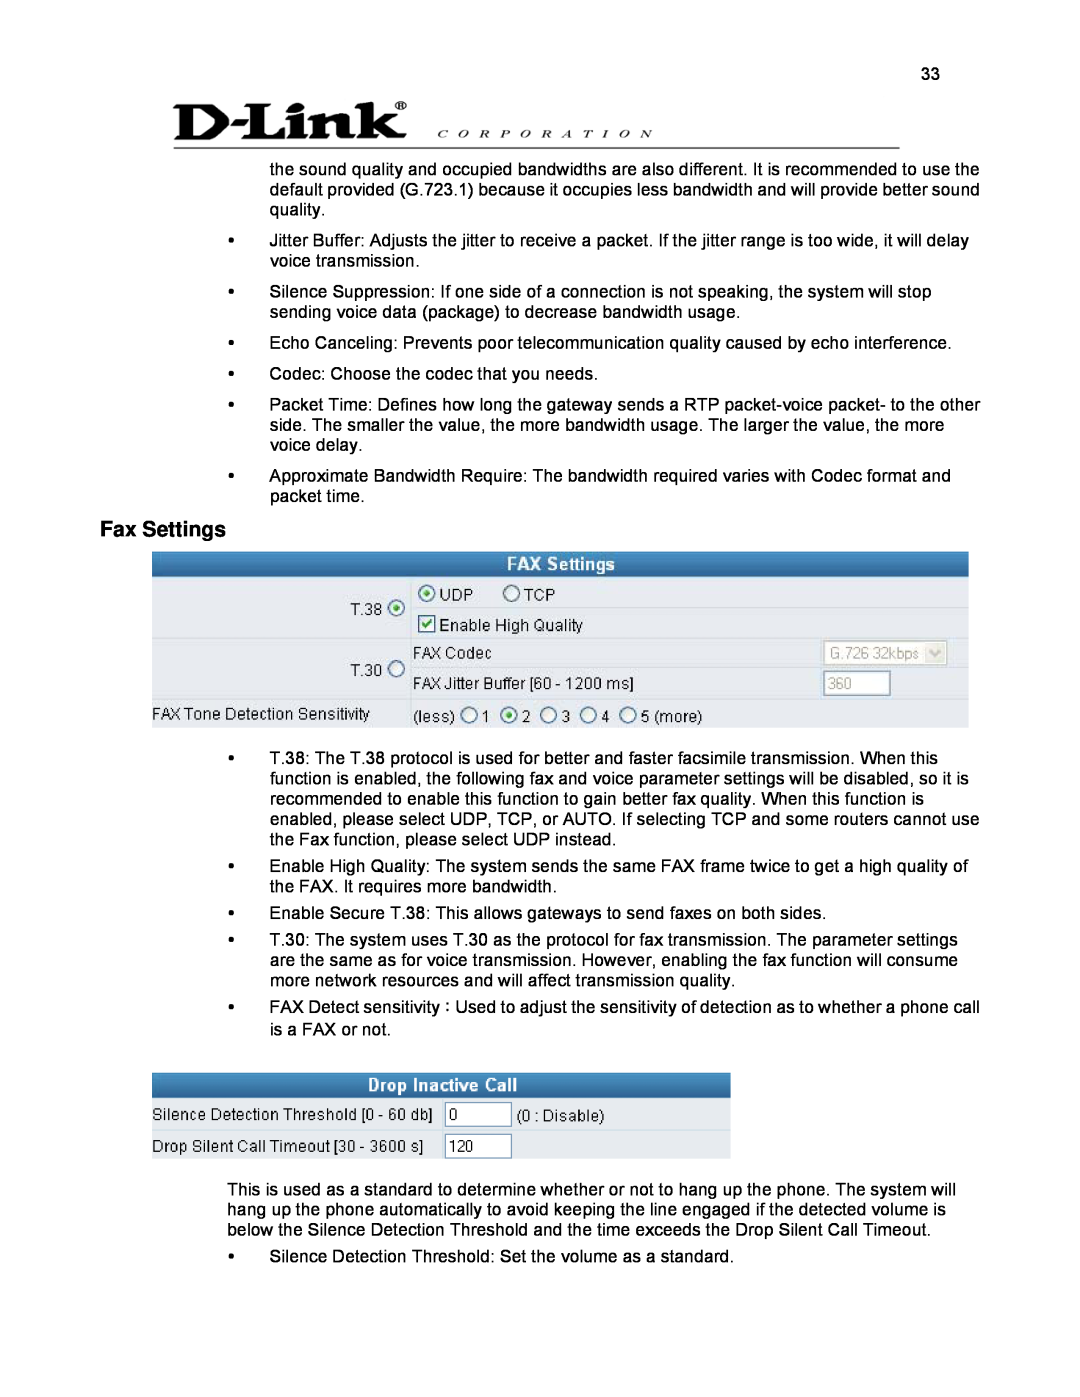 D-Link DVG-2032S user manual Fax Settings 